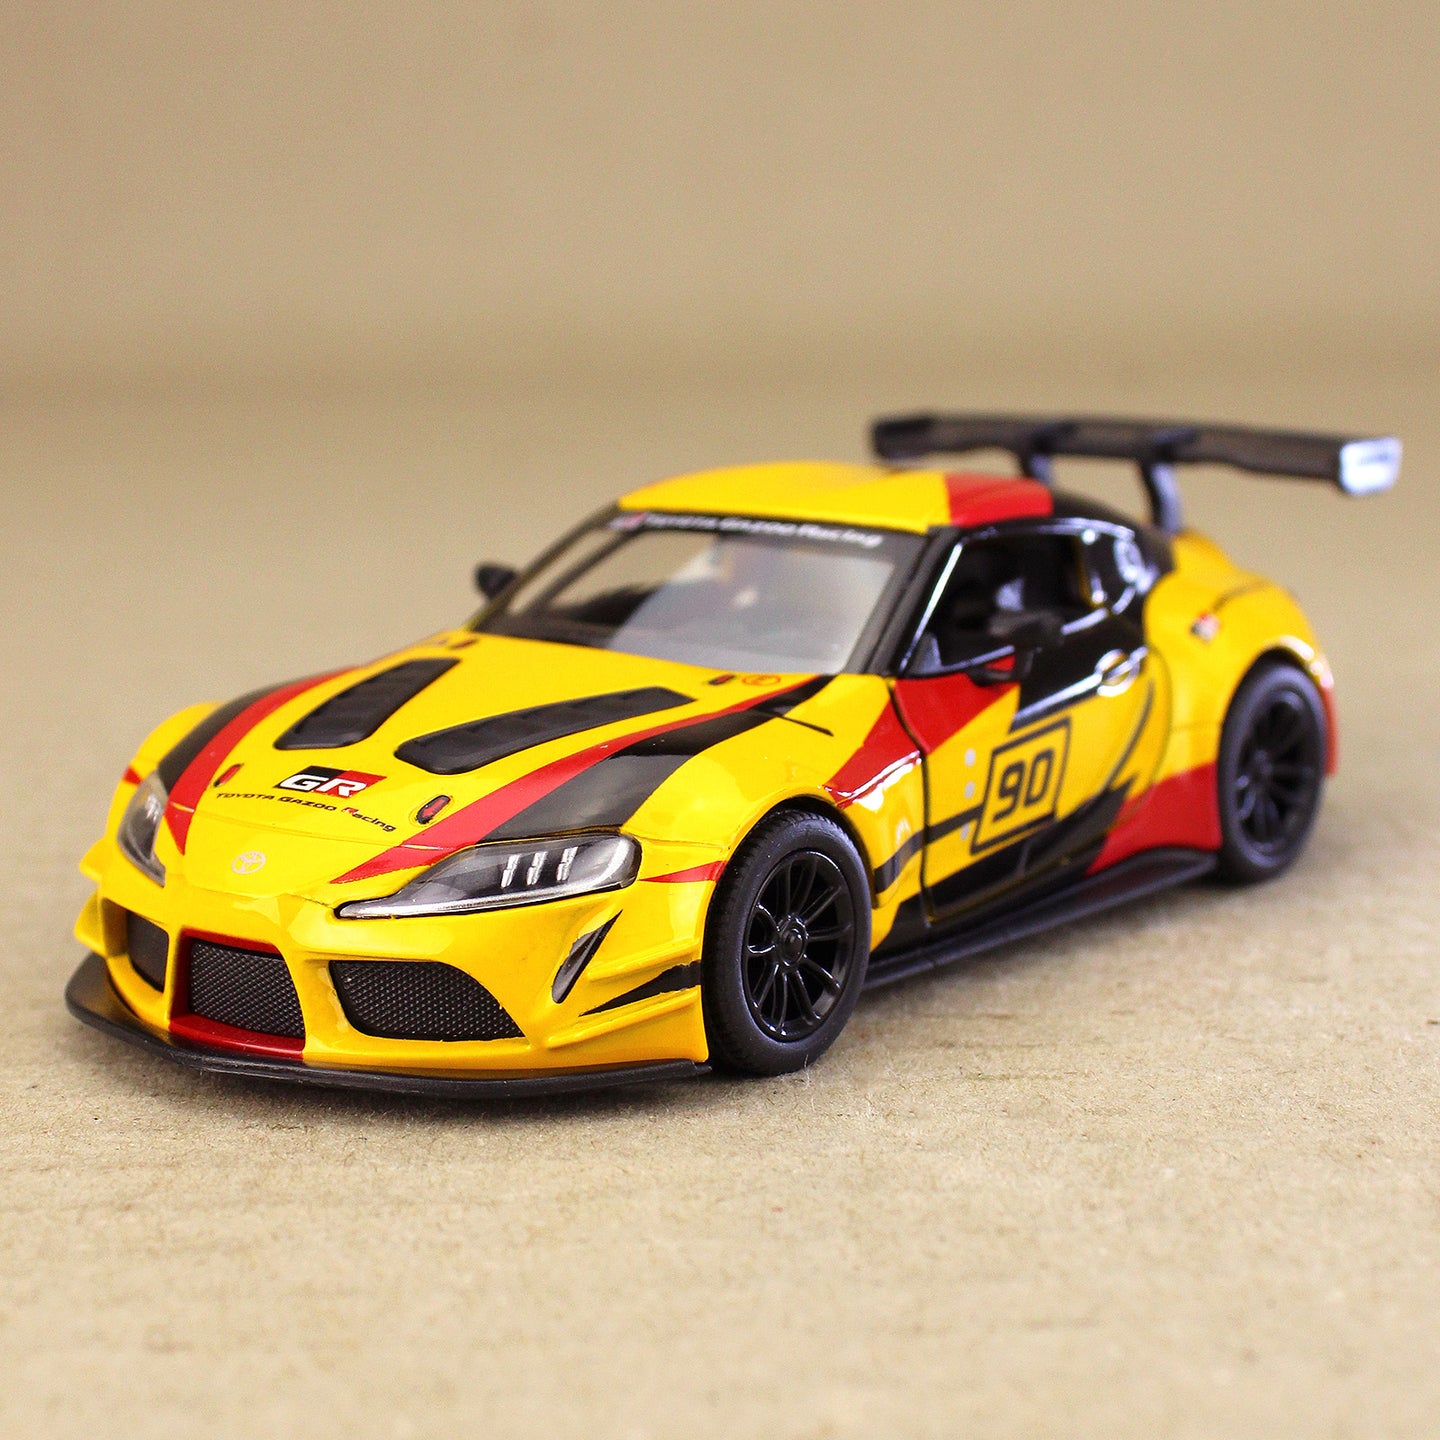 2020 Toyota Supra GR Racing Concept Car - Yellow